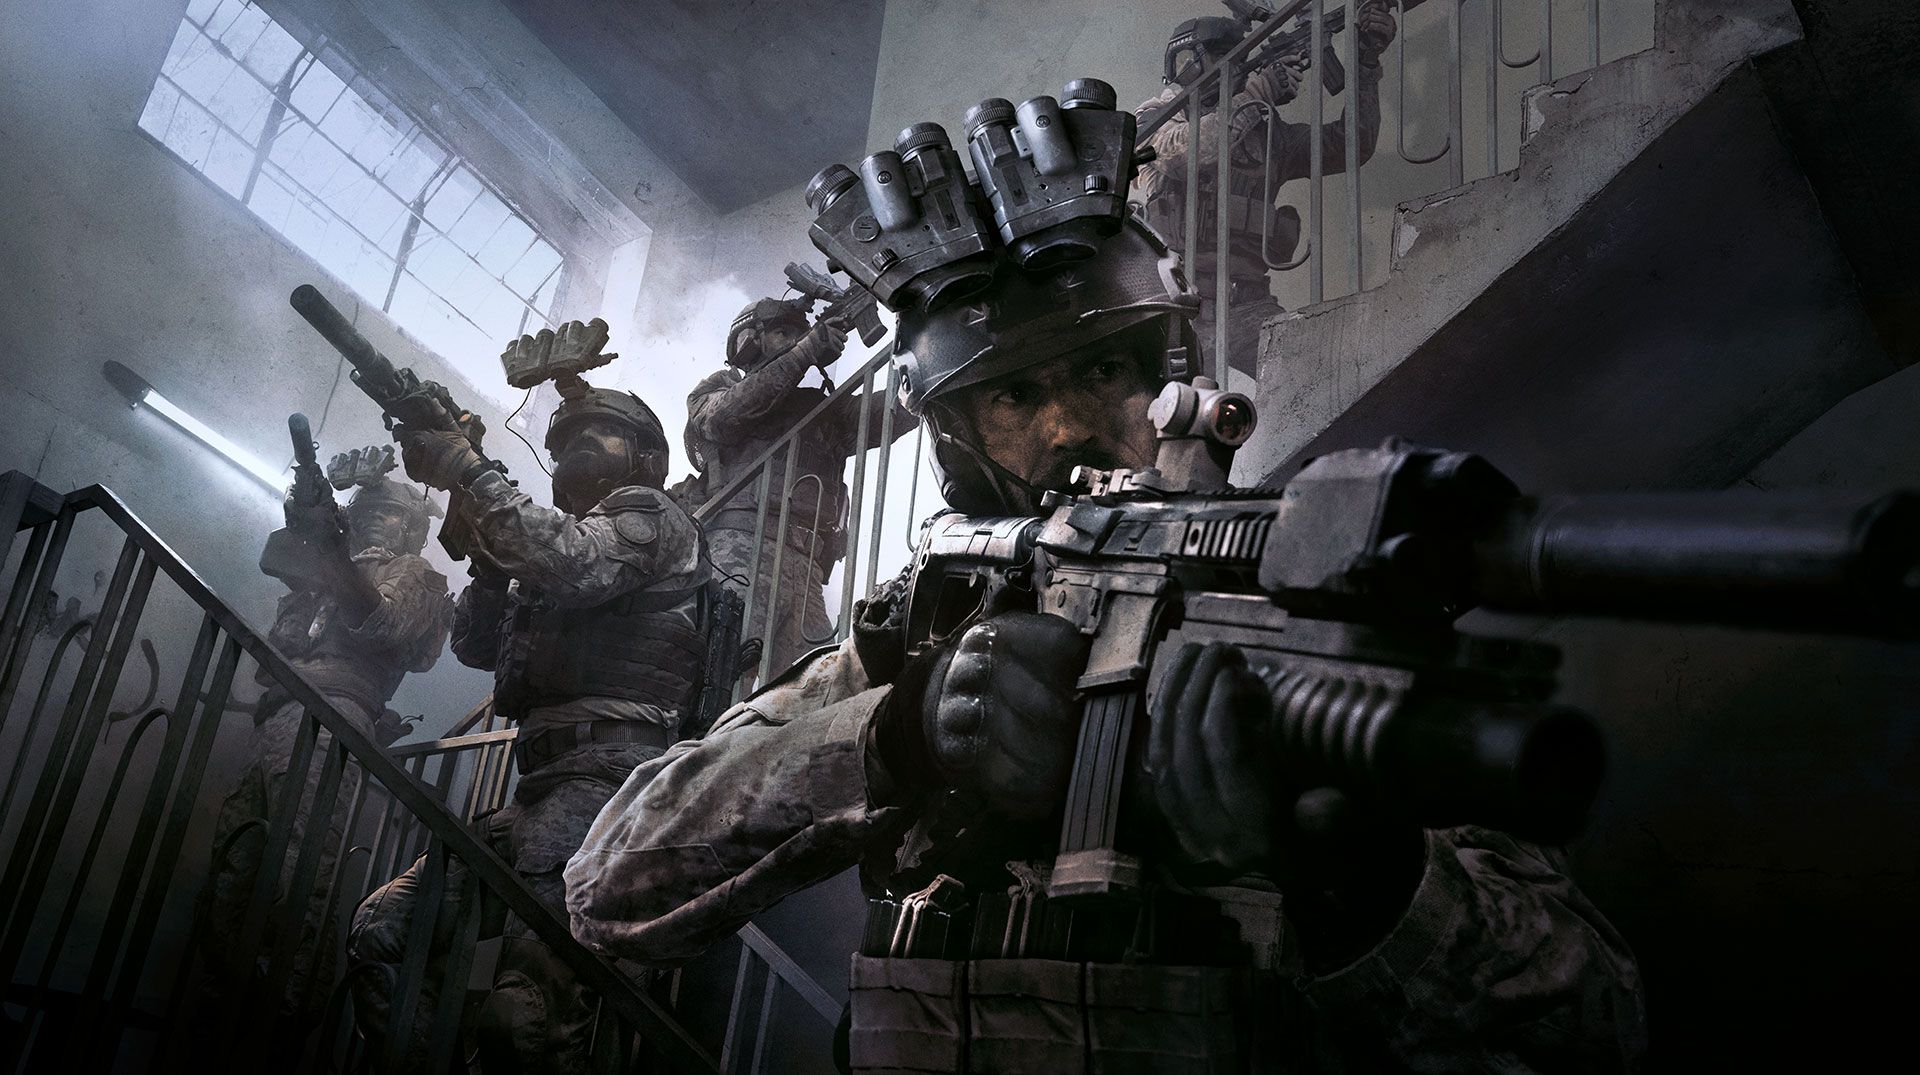 Call of Duty: Modern Warfare (2019) still worth buying? Indian Wire